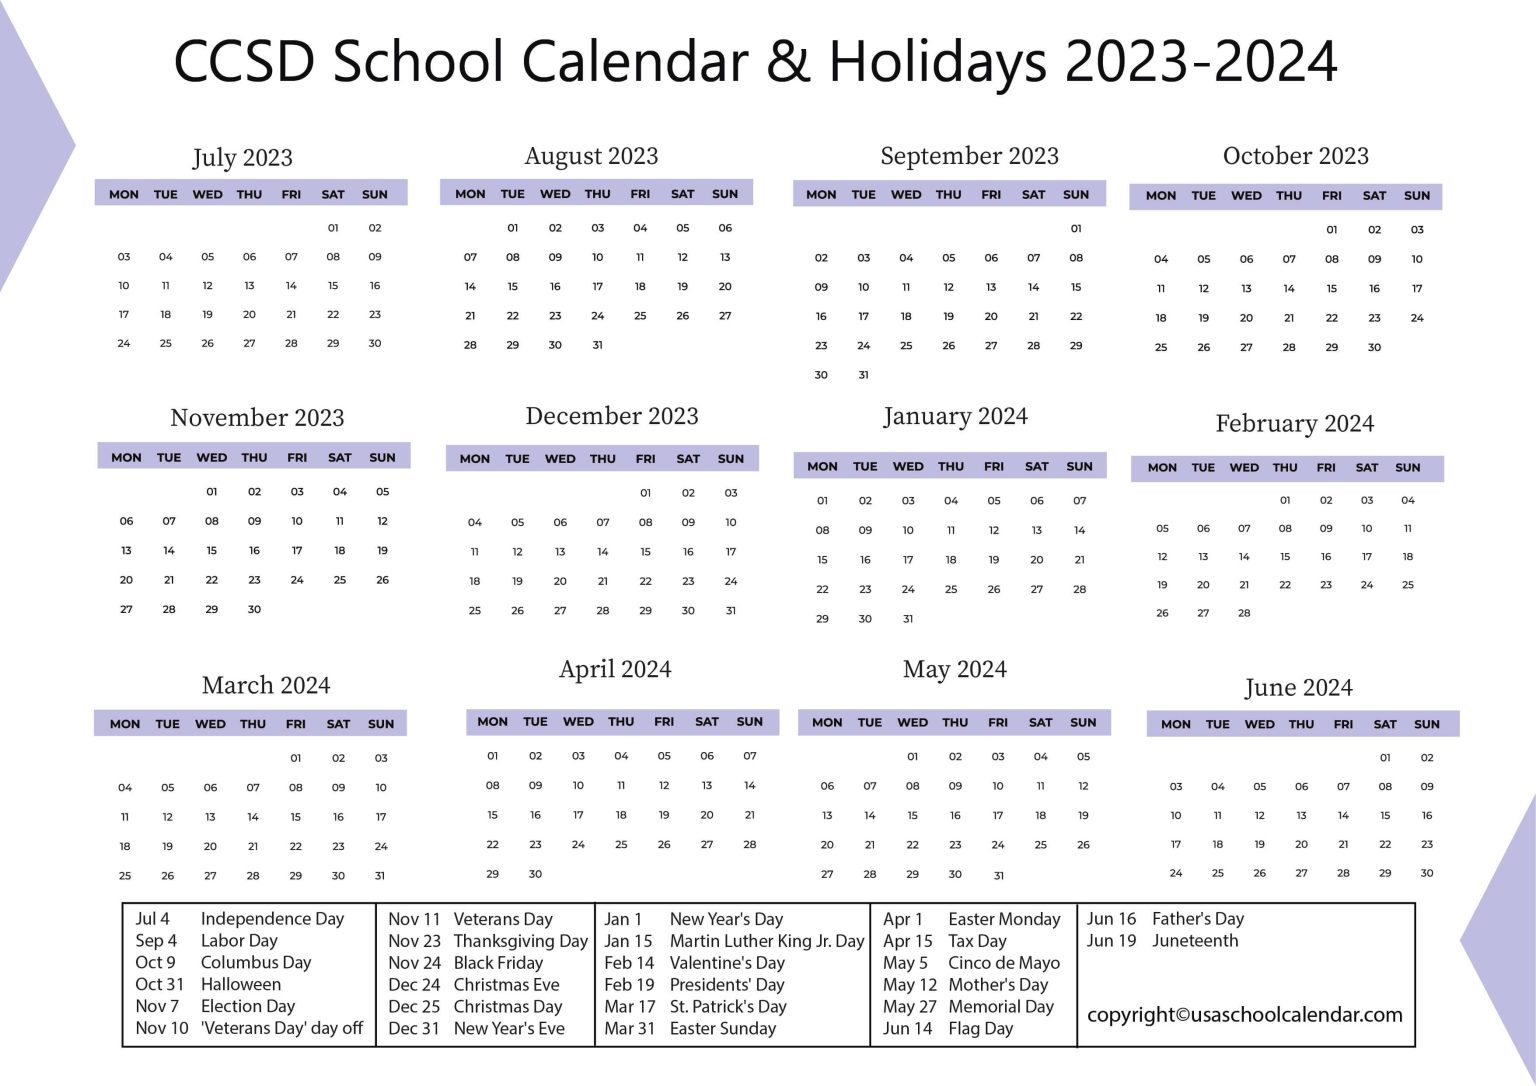 CCSD School Calendar & Holidays 20232024 [Clark County]